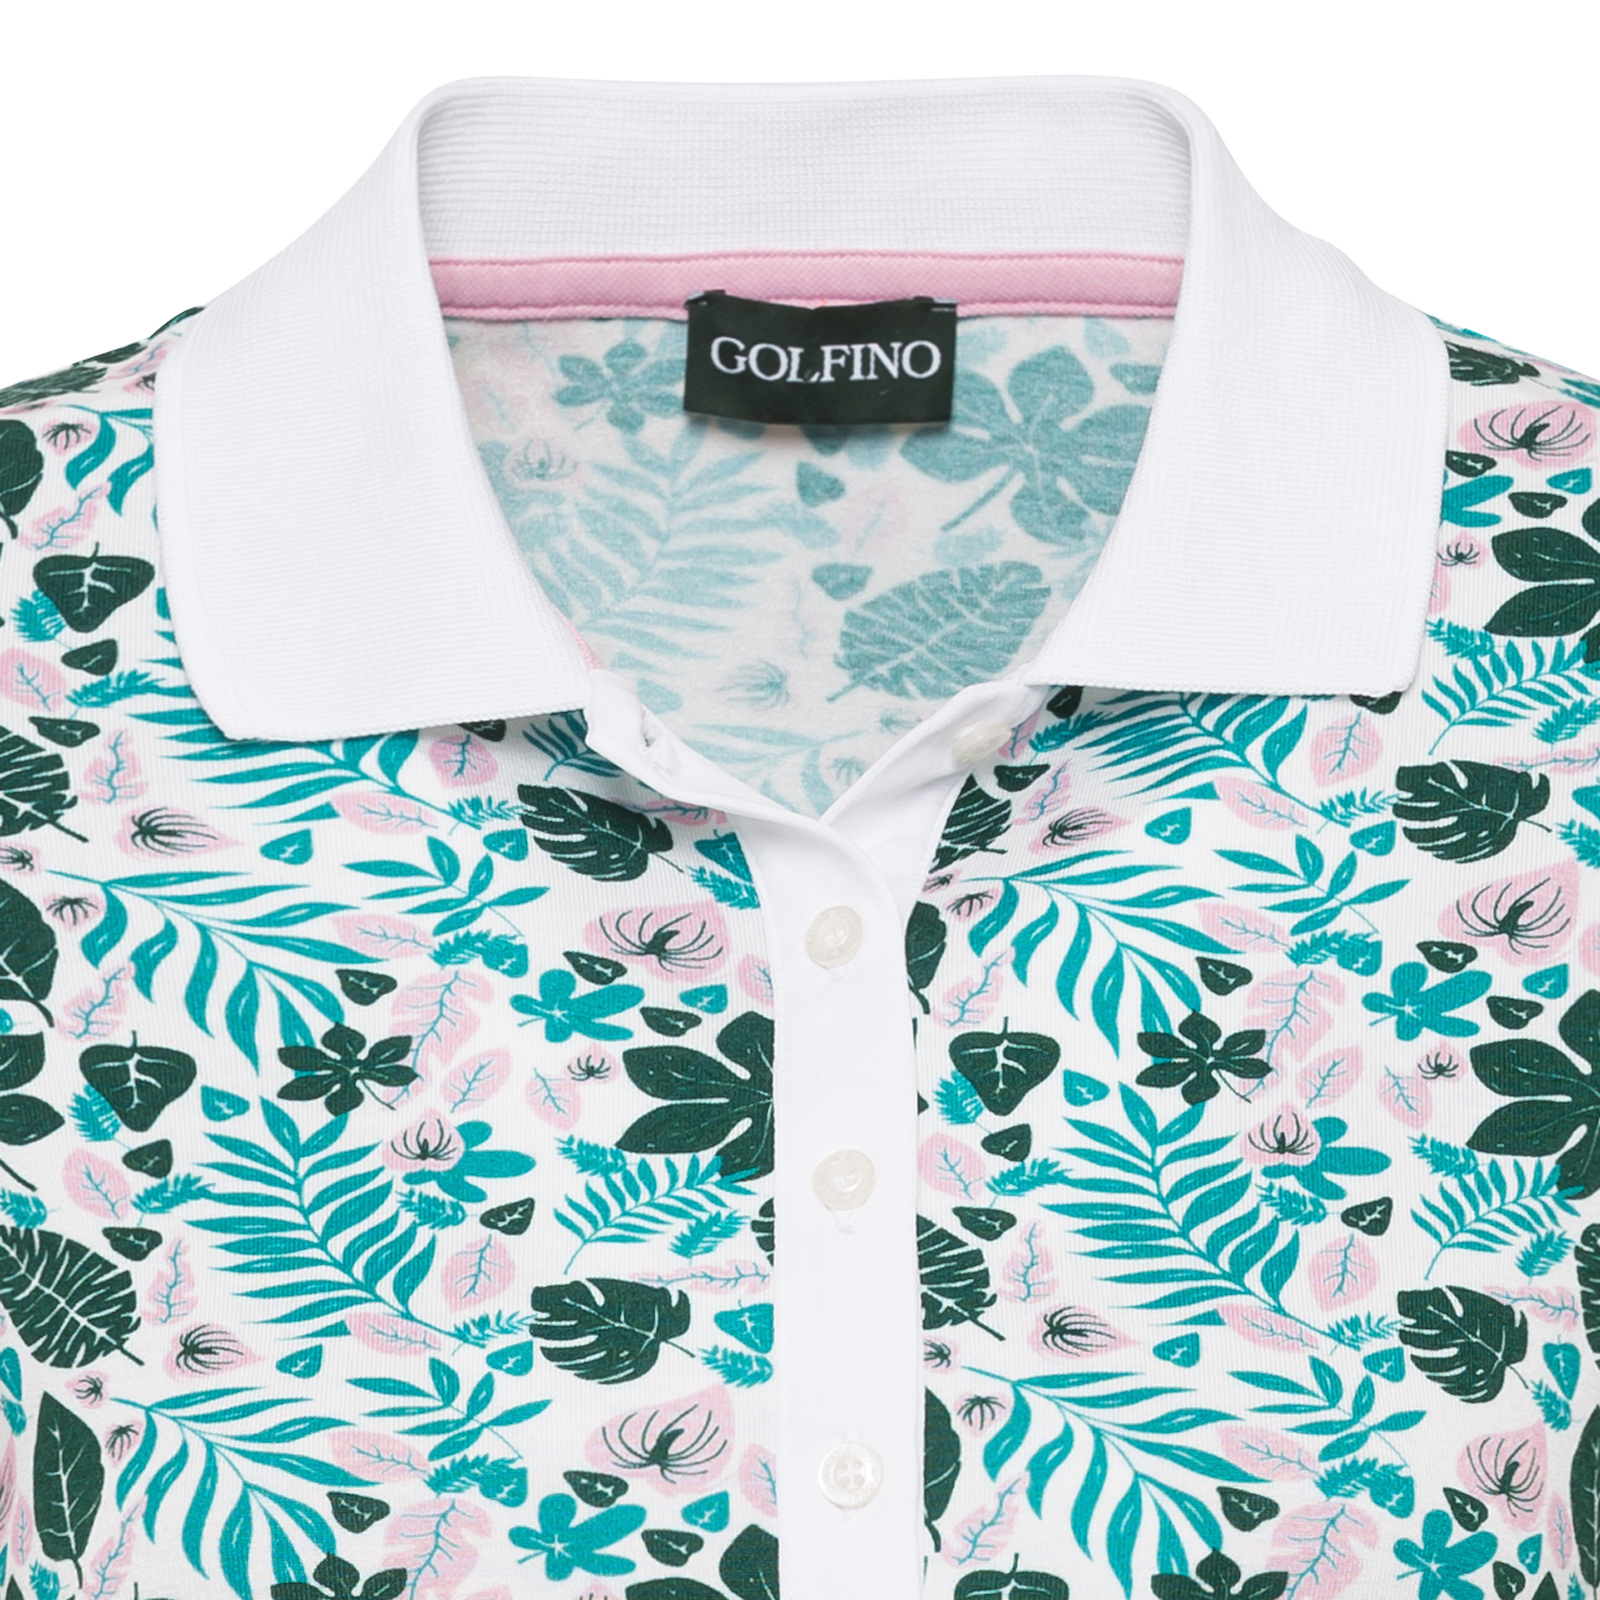 Stylishly patterned ladies' golf polo shirt